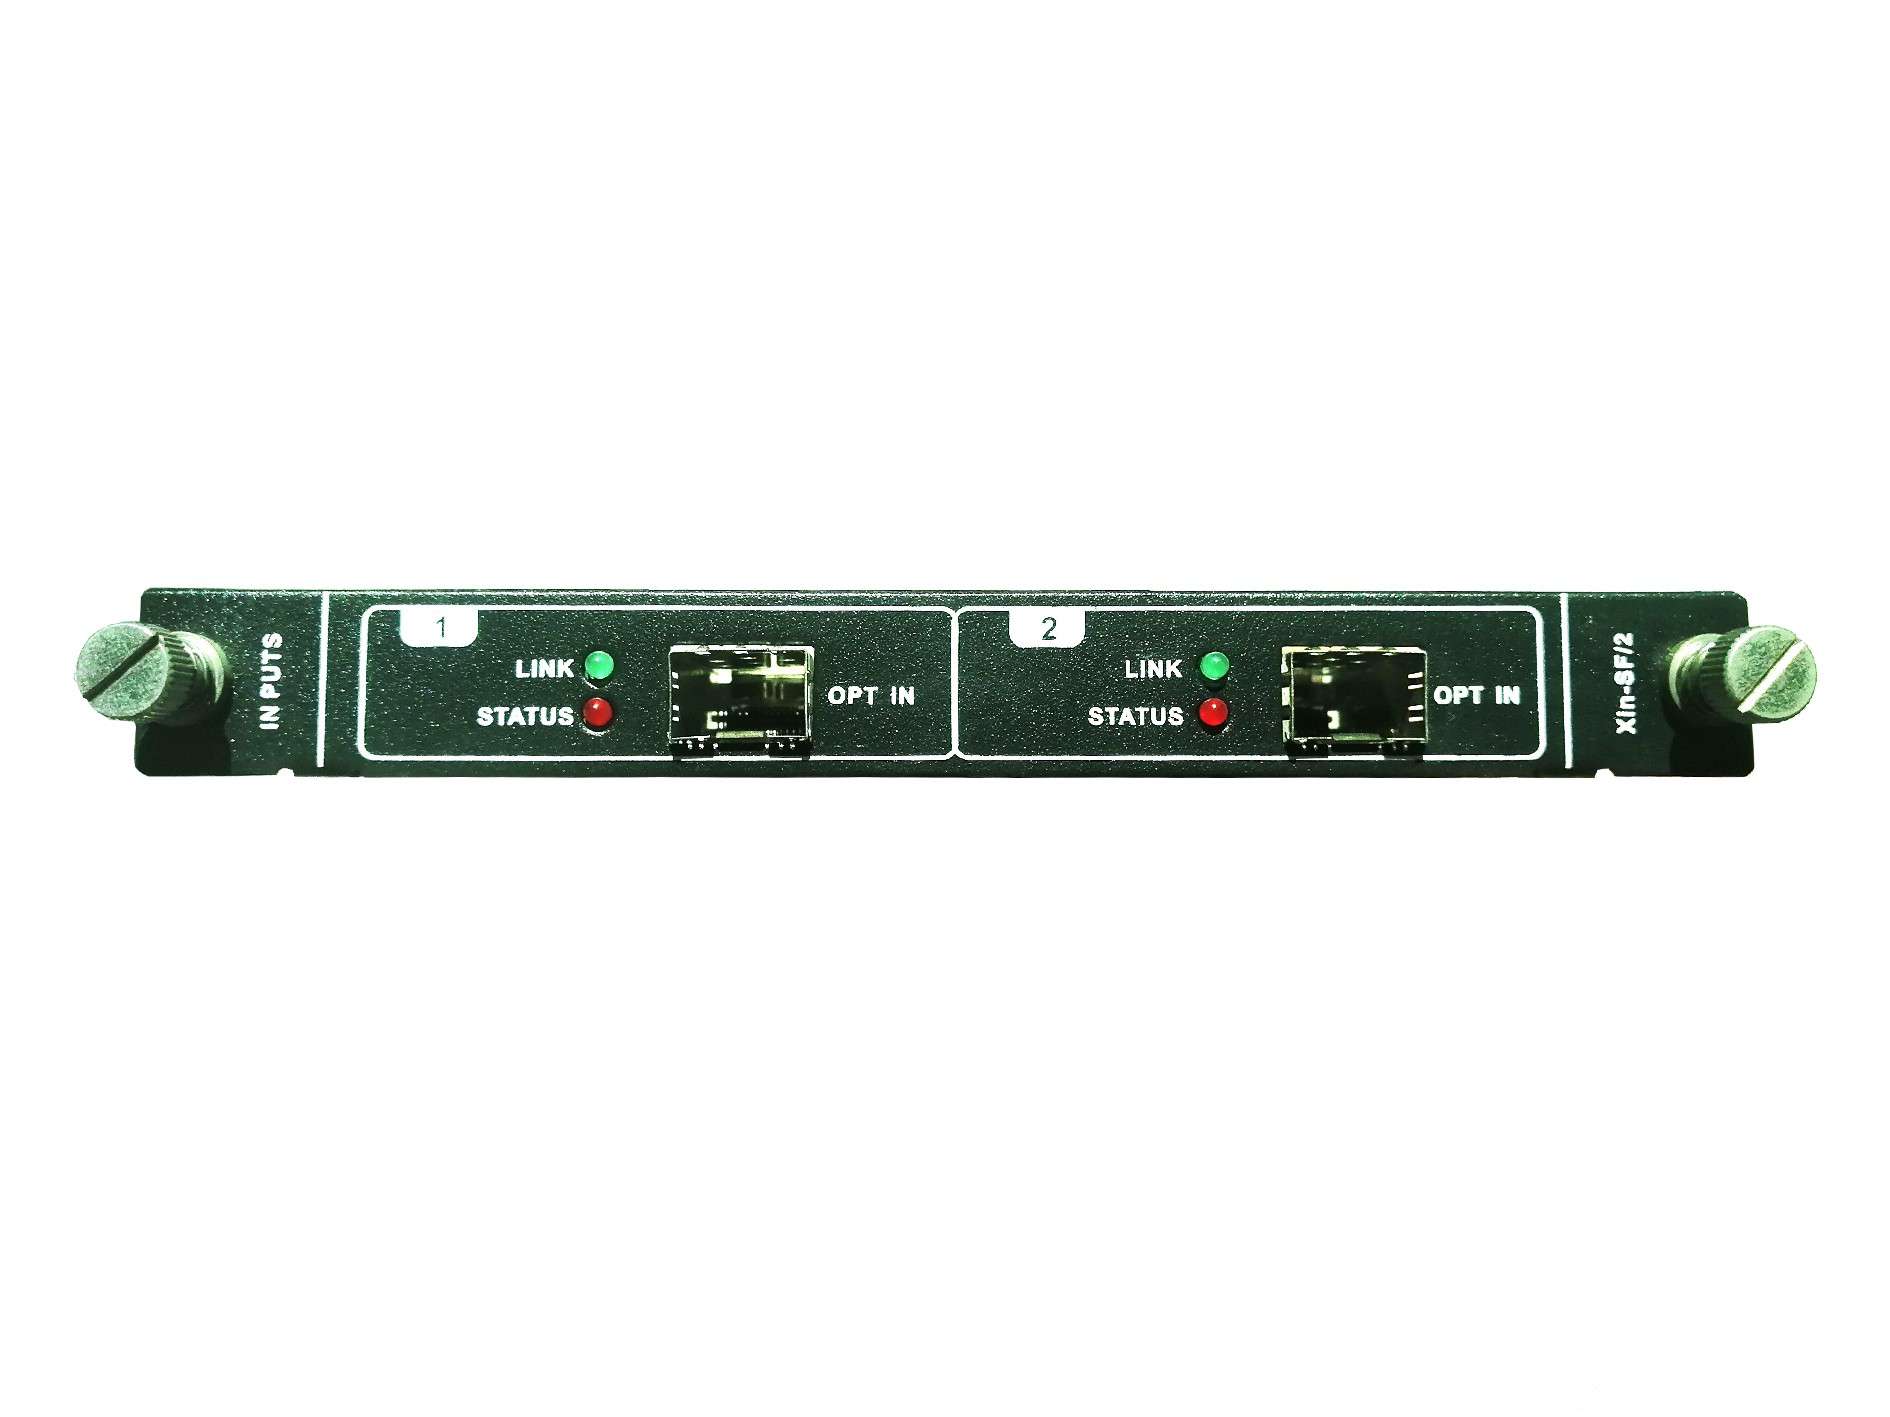 2 optical input boards